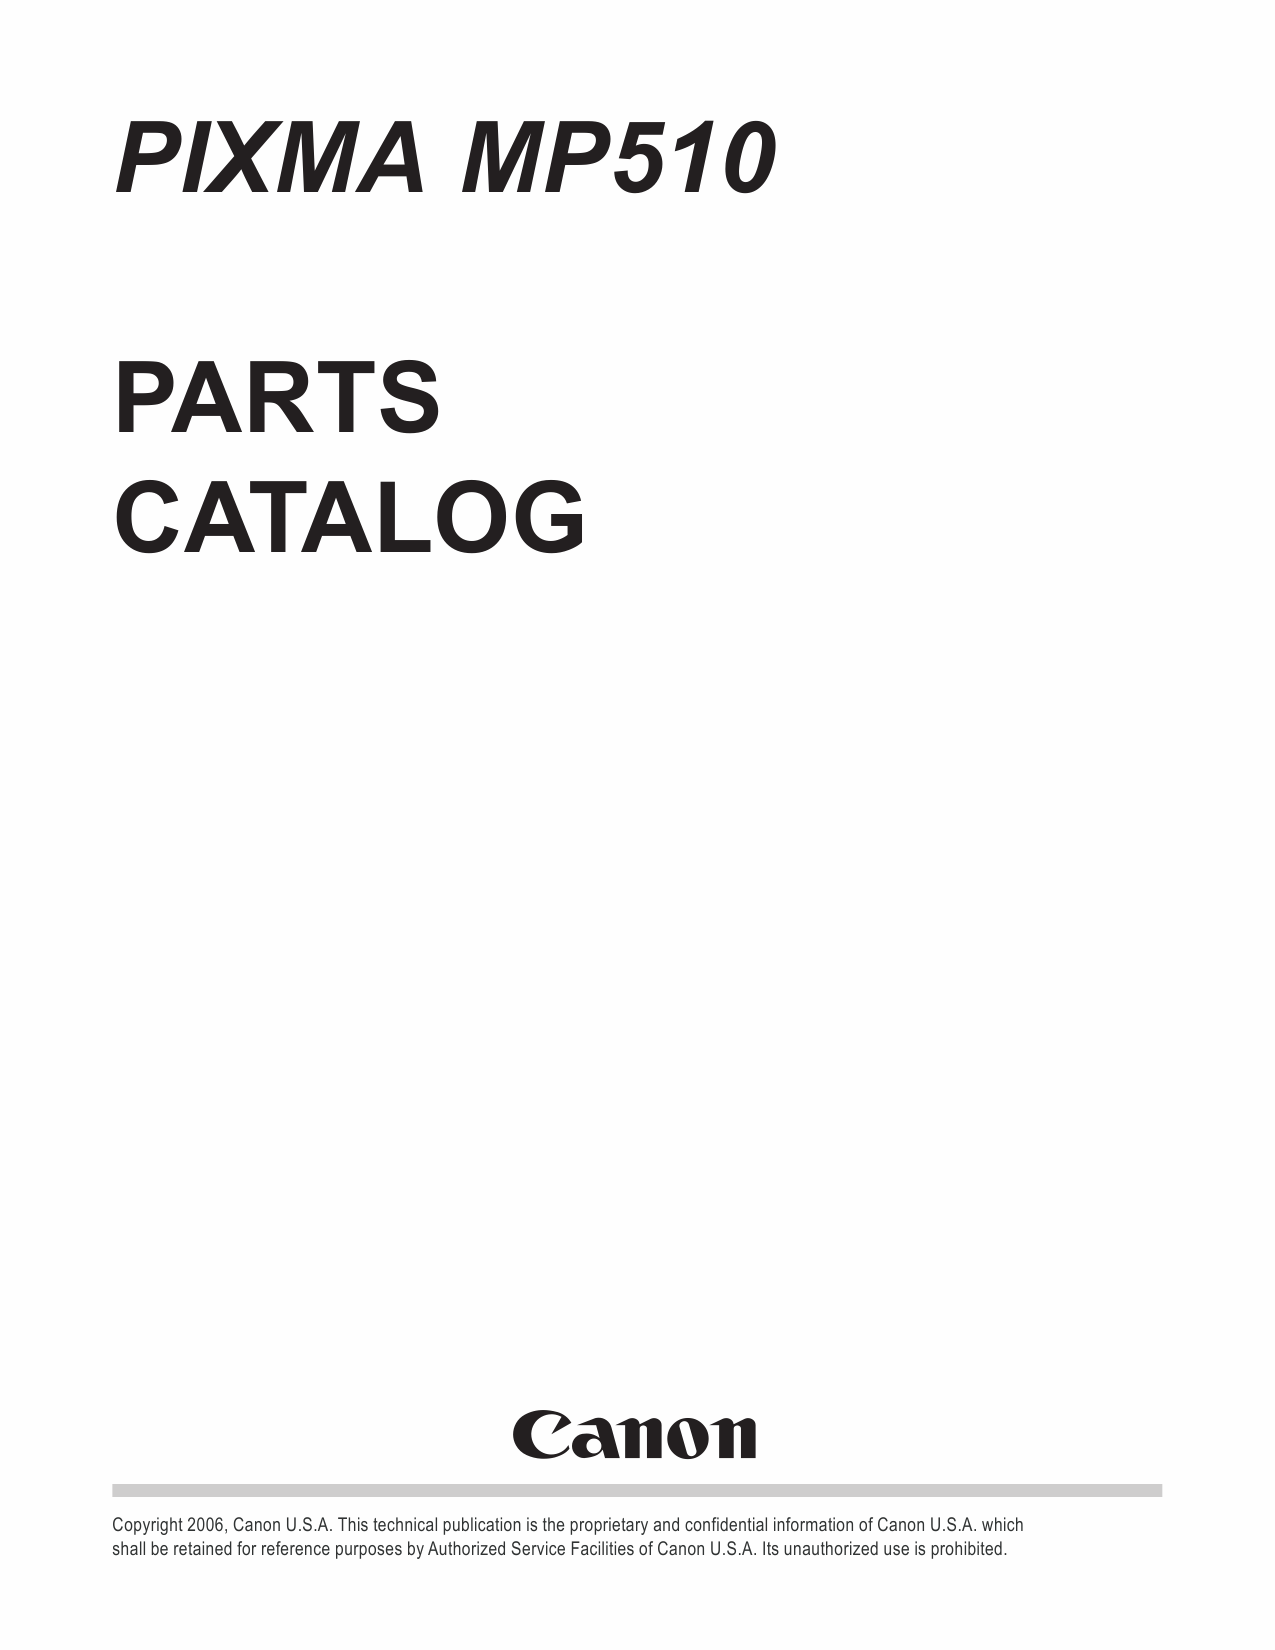 Canon PIXMA MP510 Parts Catalog Manual-1